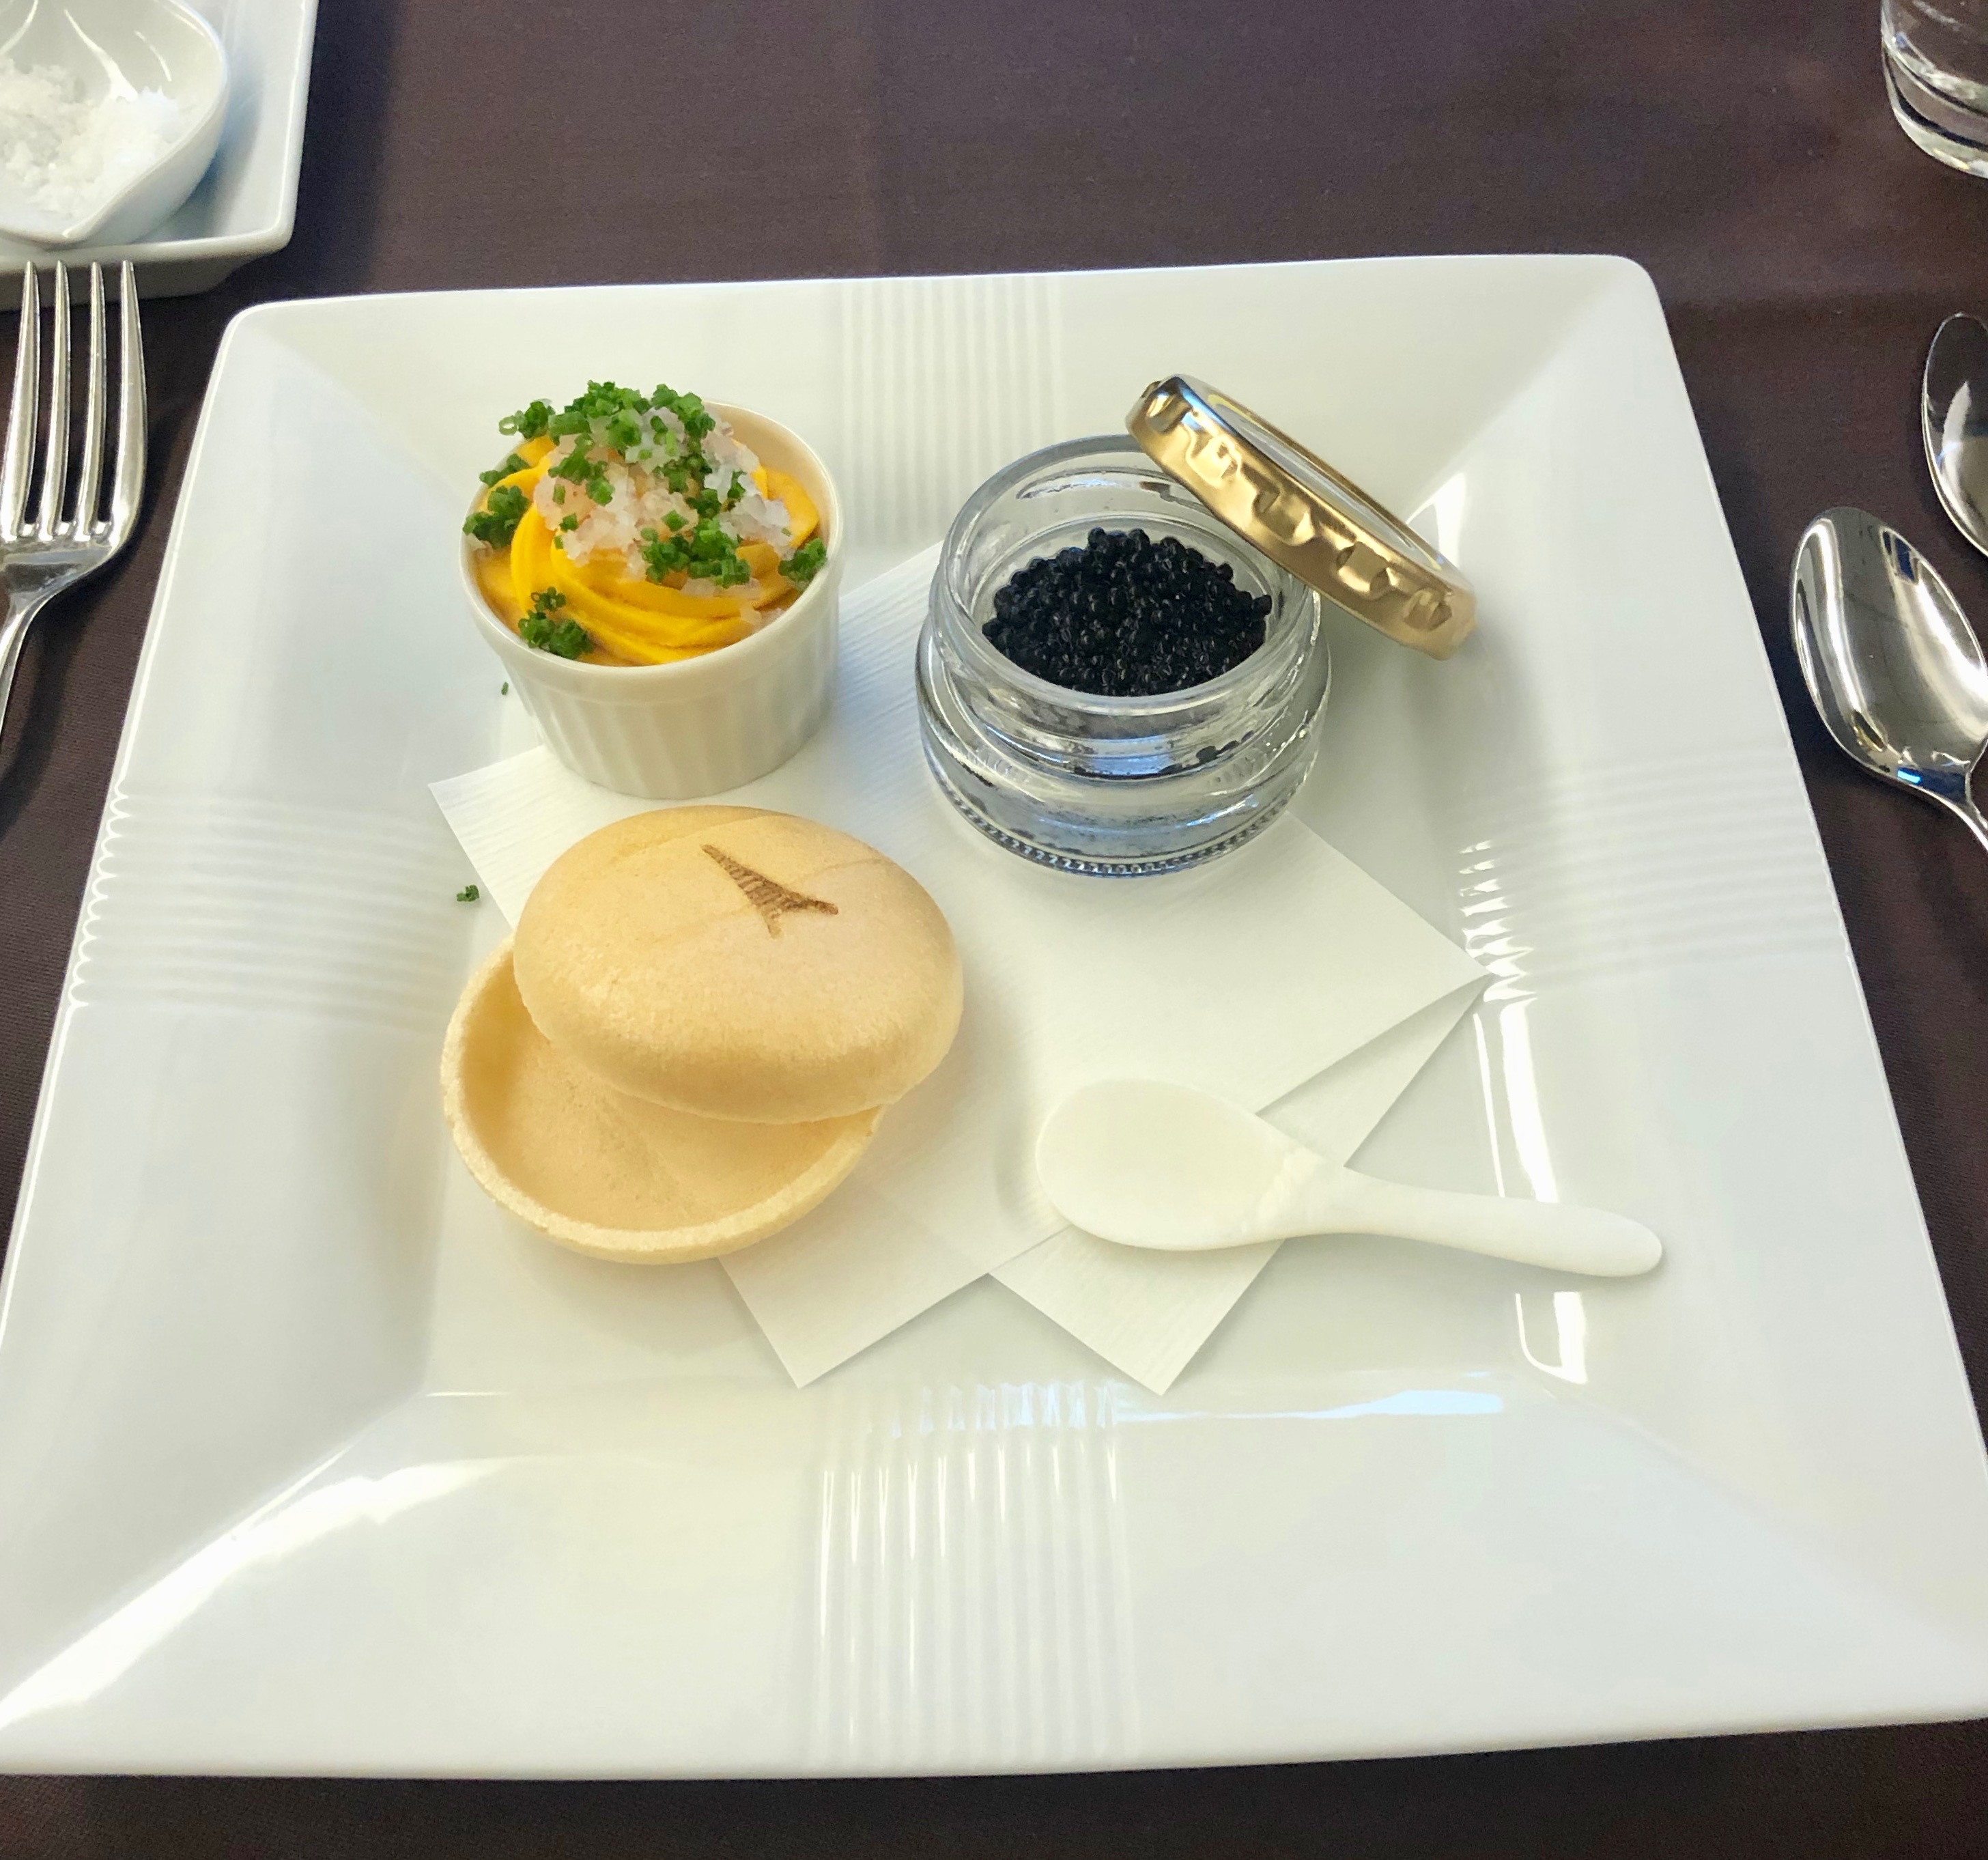 JAL First Class caviar service